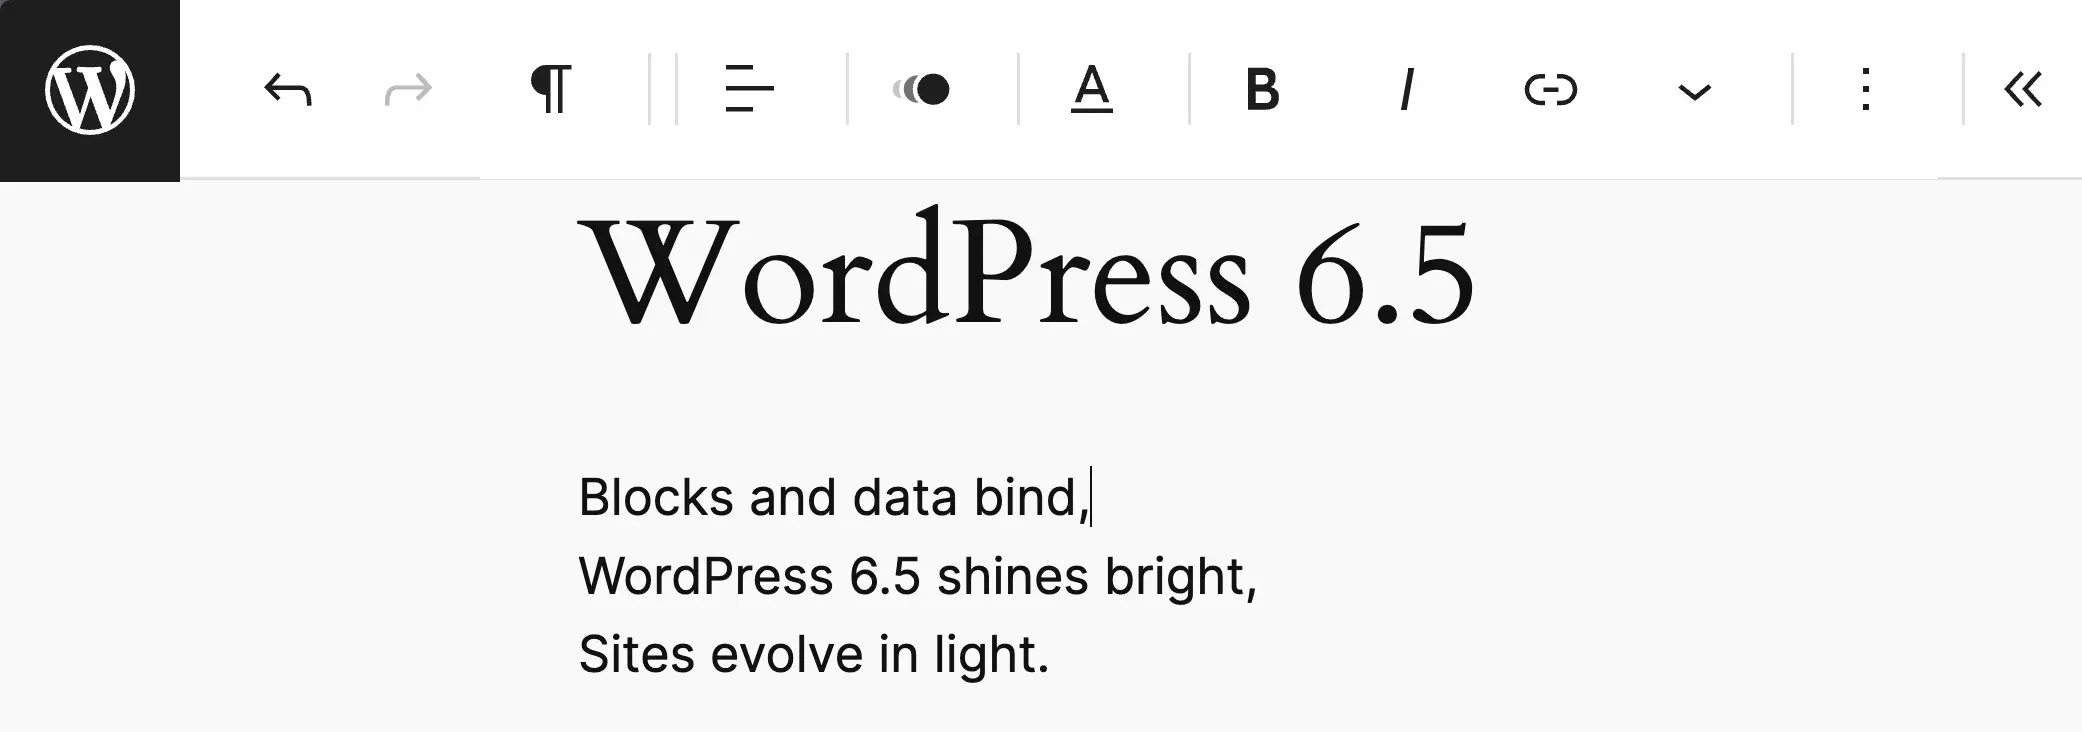 WordPress 6.5 启用无干扰模式，展示顶部工具栏。